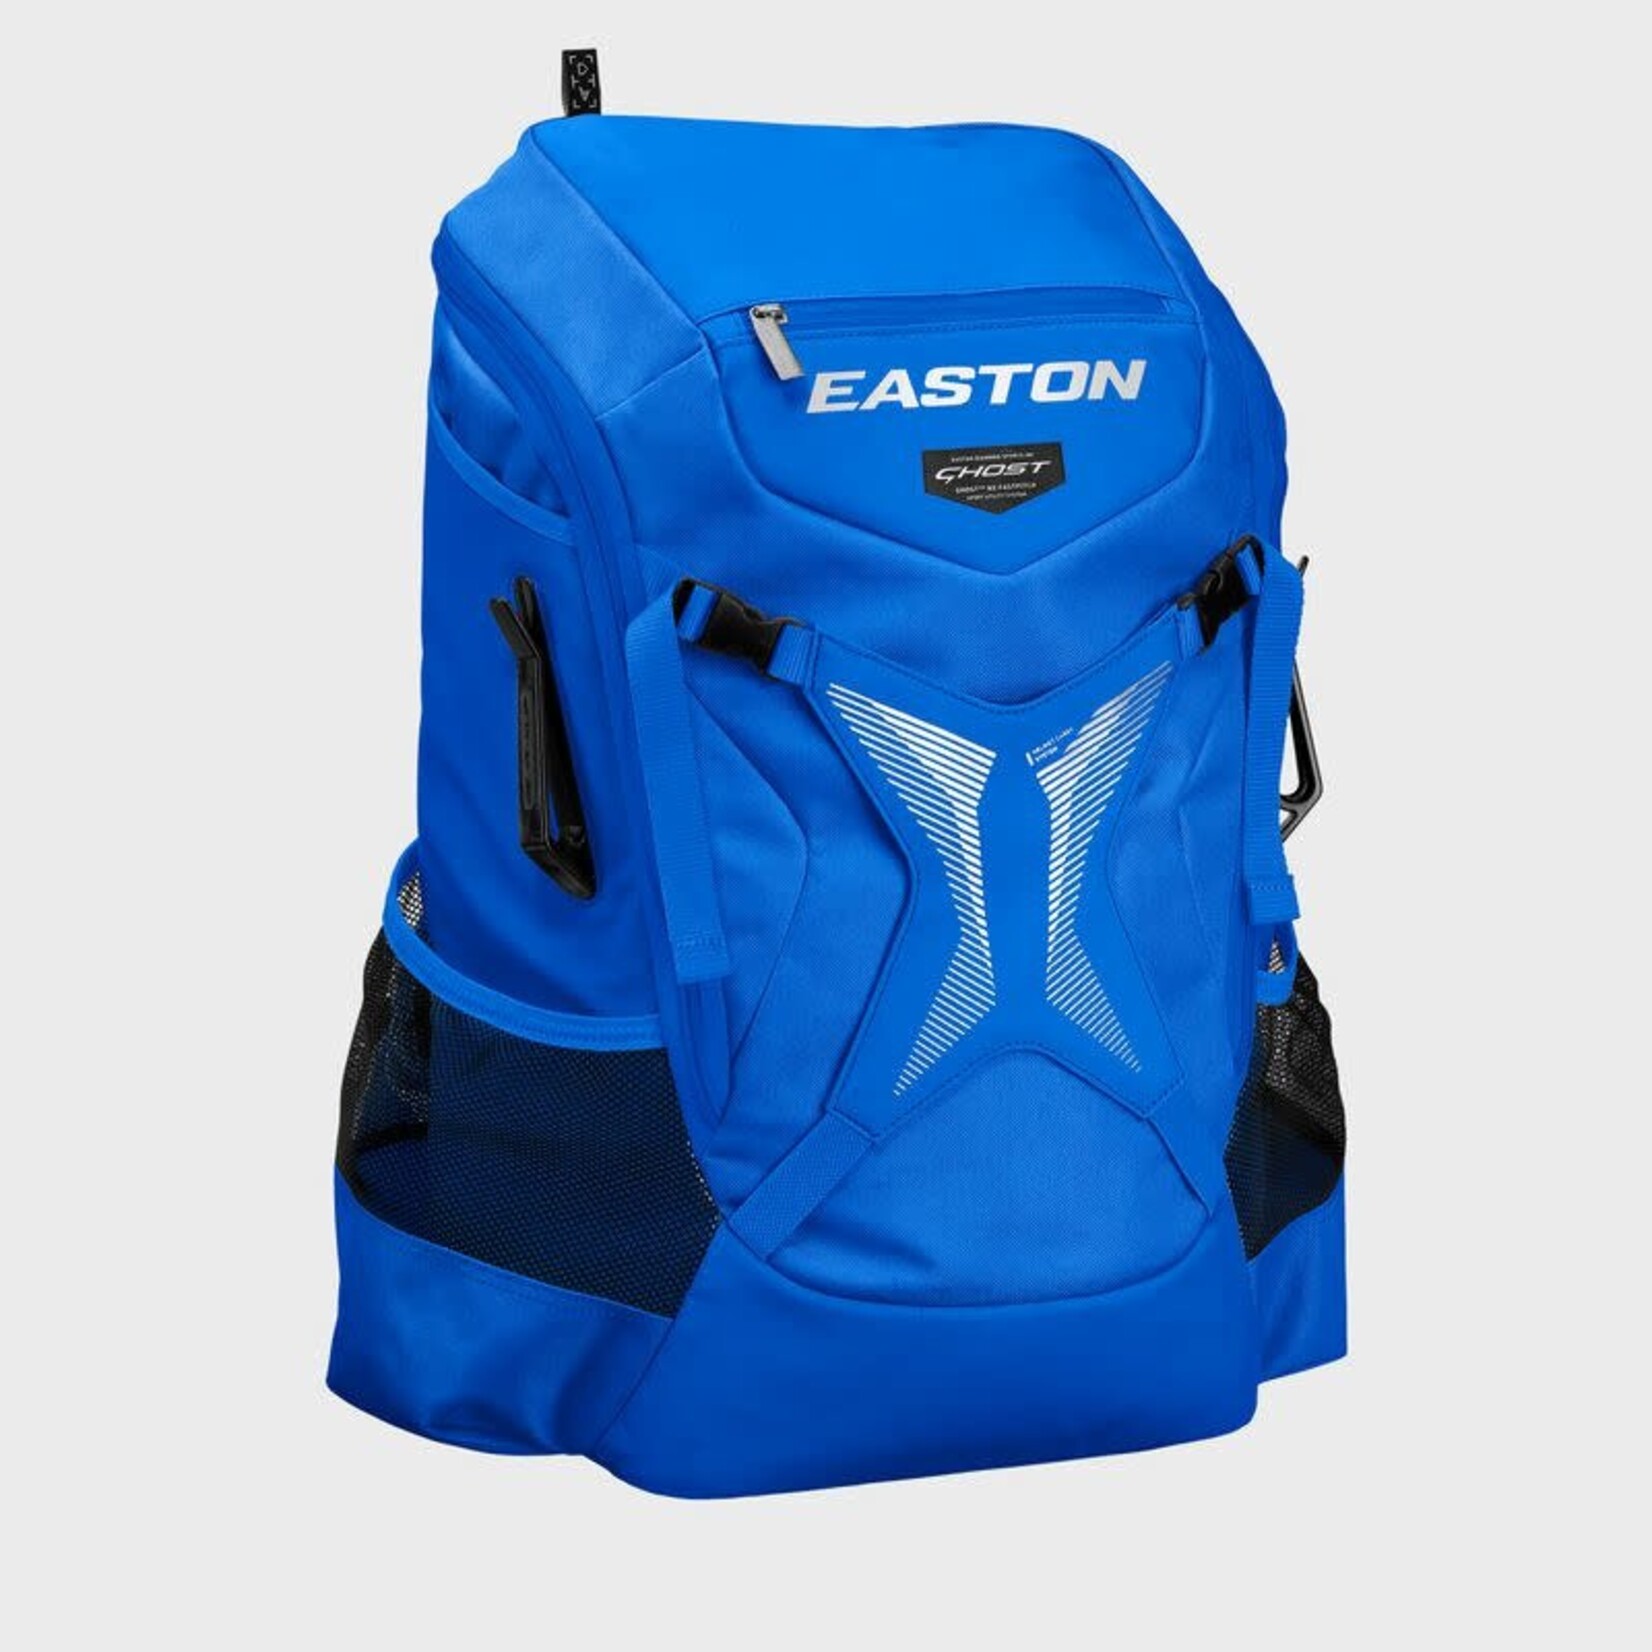 Easton Easton Baseball Bag, Ghost NX Fastpitch Backpack